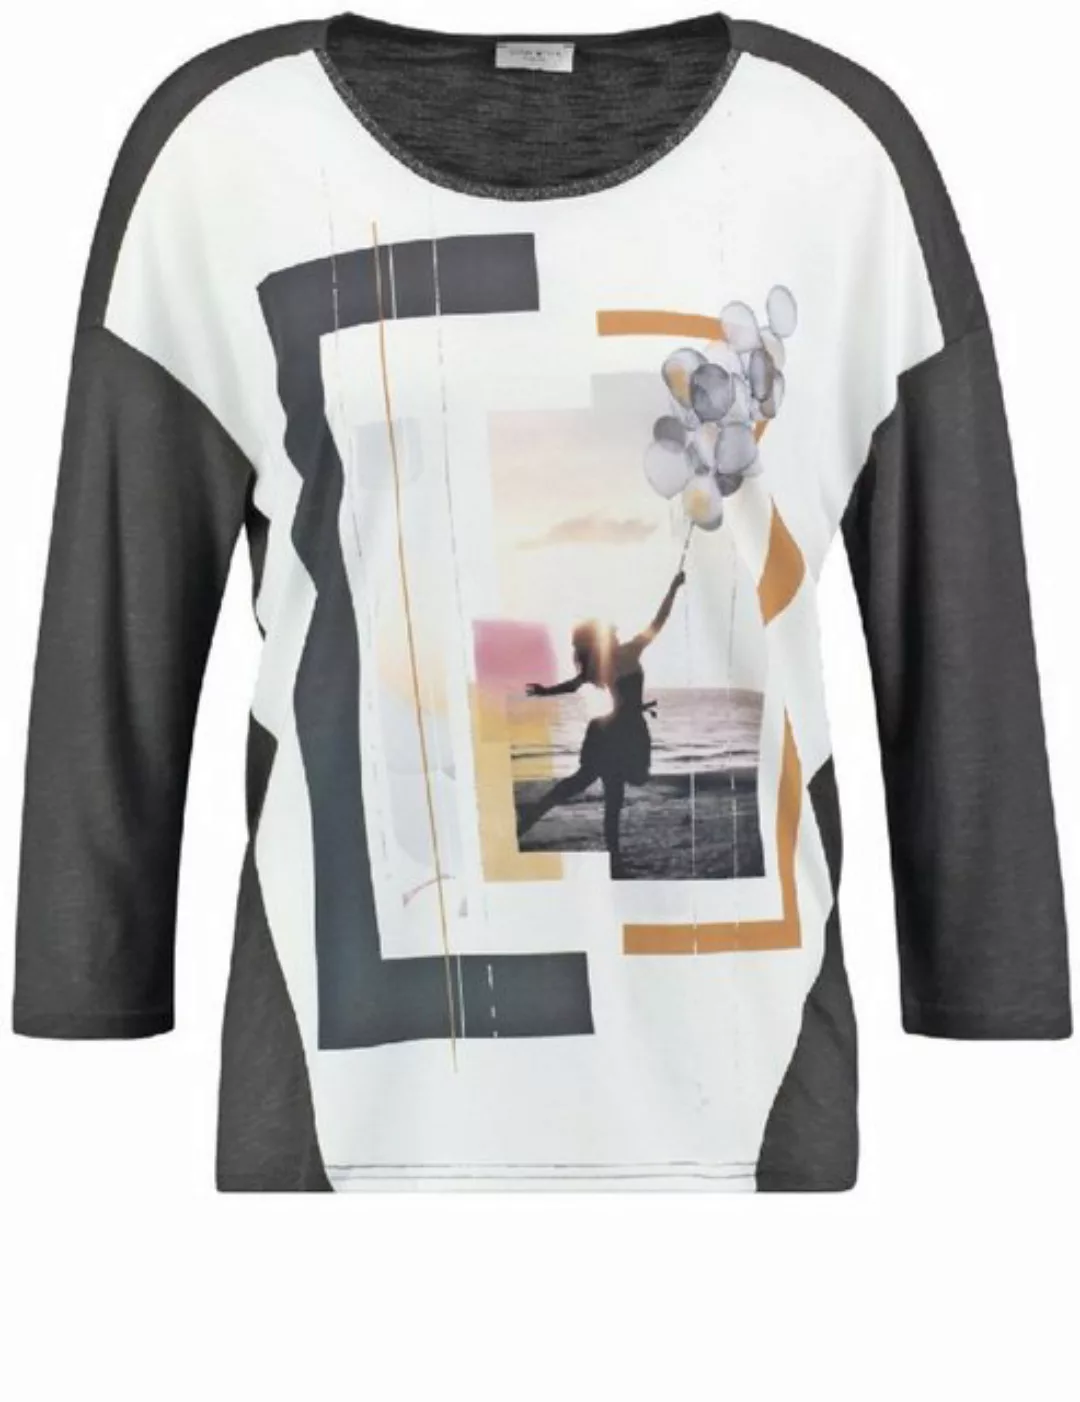 GERRY WEBER Shirtbluse T-SHIRT 3/4 ARM günstig online kaufen